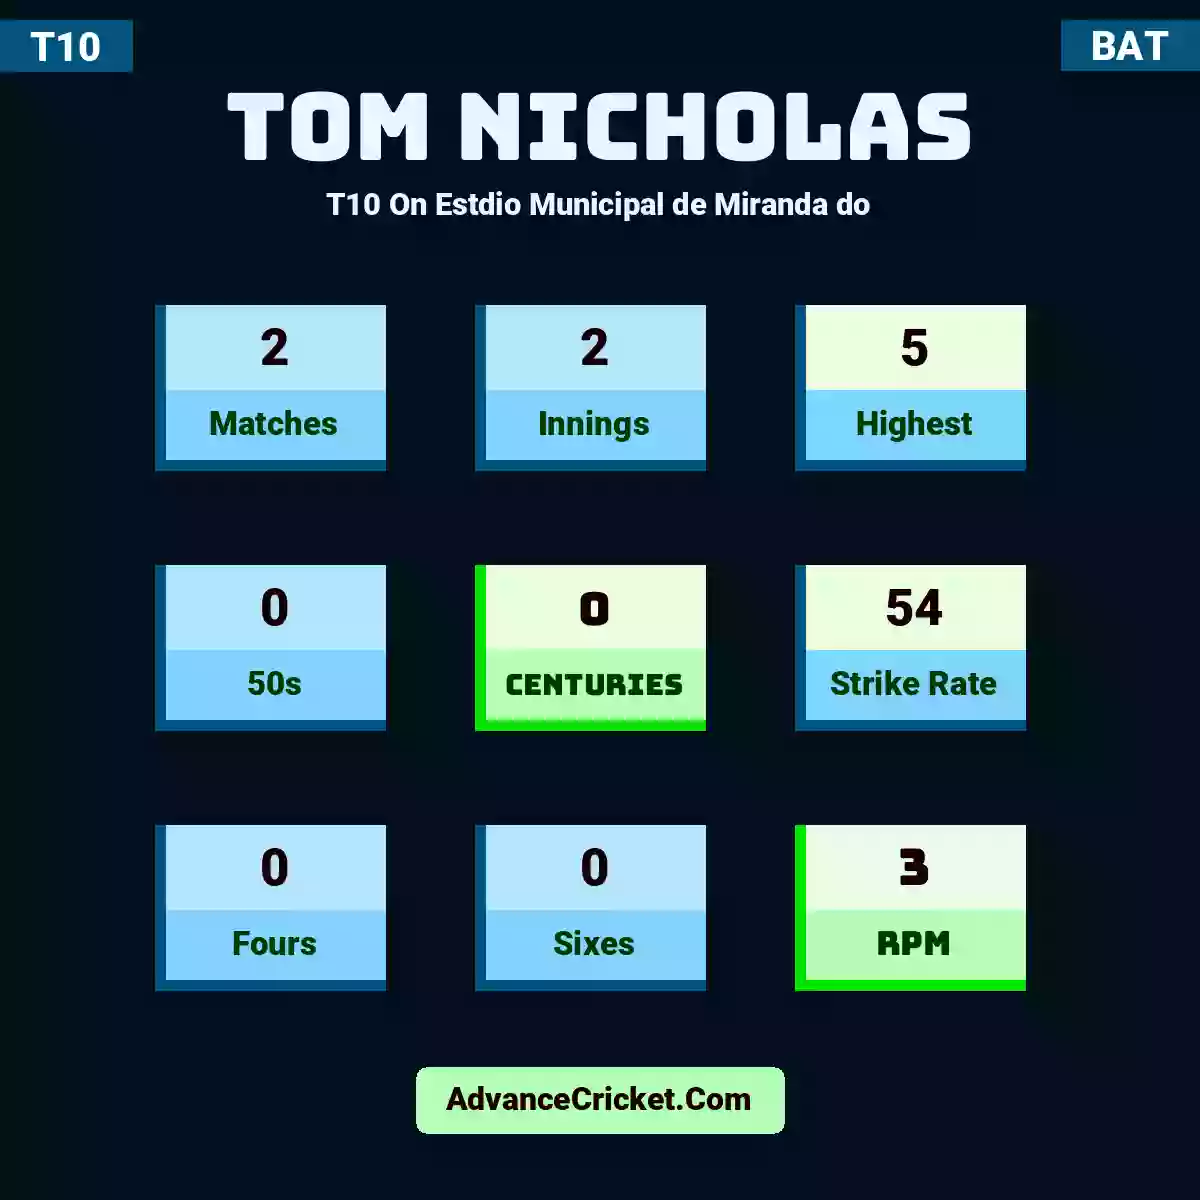 Tom Nicholas T10  On Estdio Municipal de Miranda do, Tom Nicholas played 2 matches, scored 5 runs as highest, 0 half-centuries, and 0 centuries, with a strike rate of 54. T.Nicholas hit 0 fours and 0 sixes, with an RPM of 3.